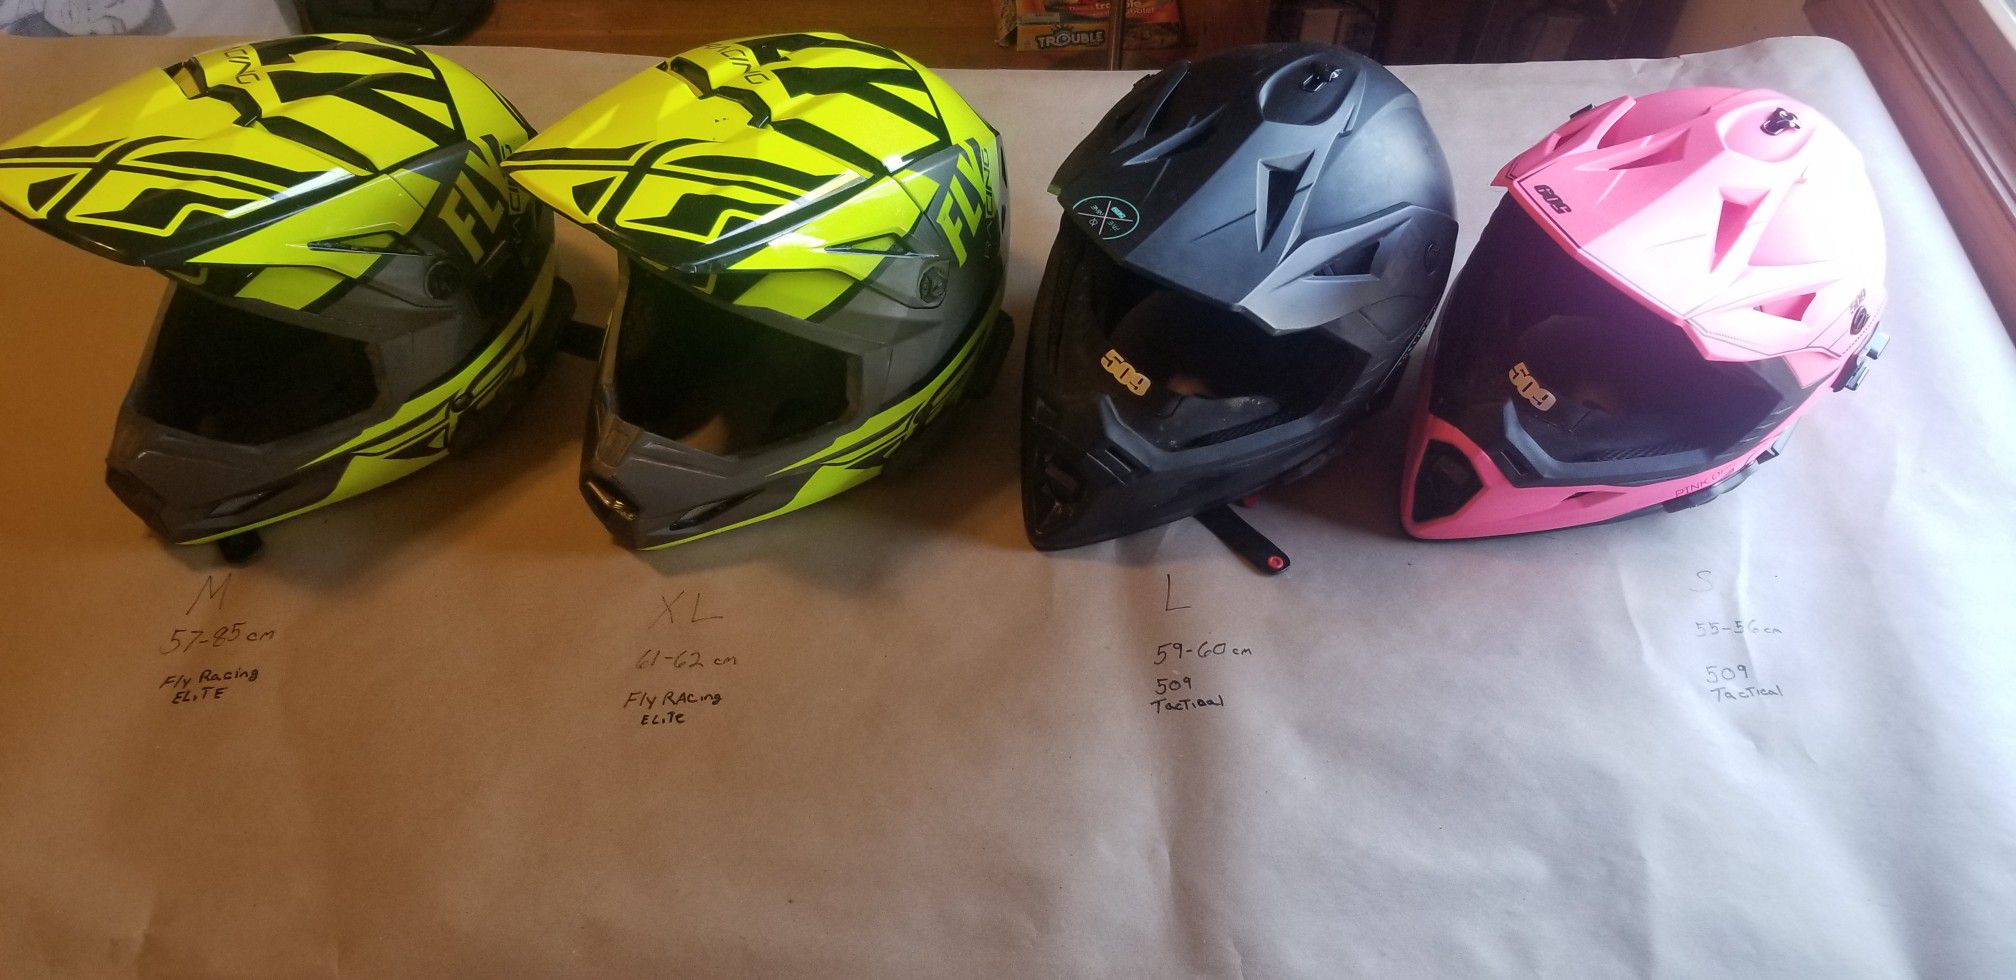 508 helmet